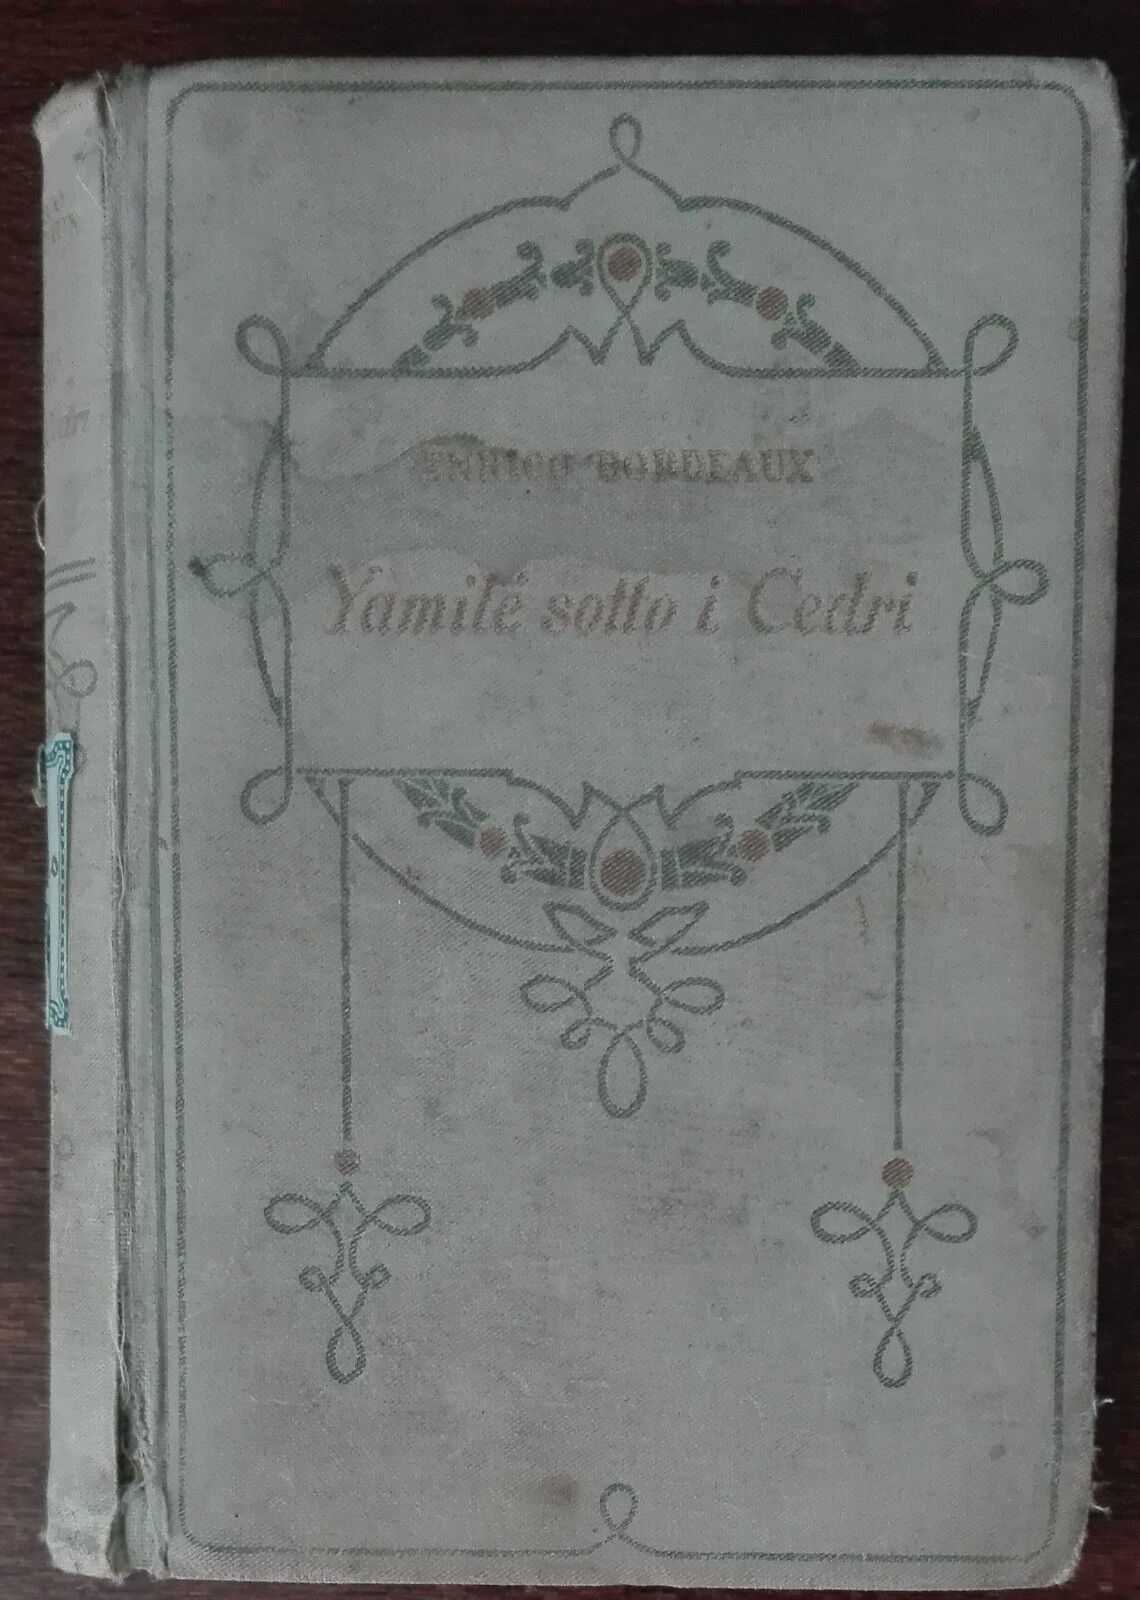 Yamile sotto i cedri - Enrico Bordeaux - Salani, 1930 - A